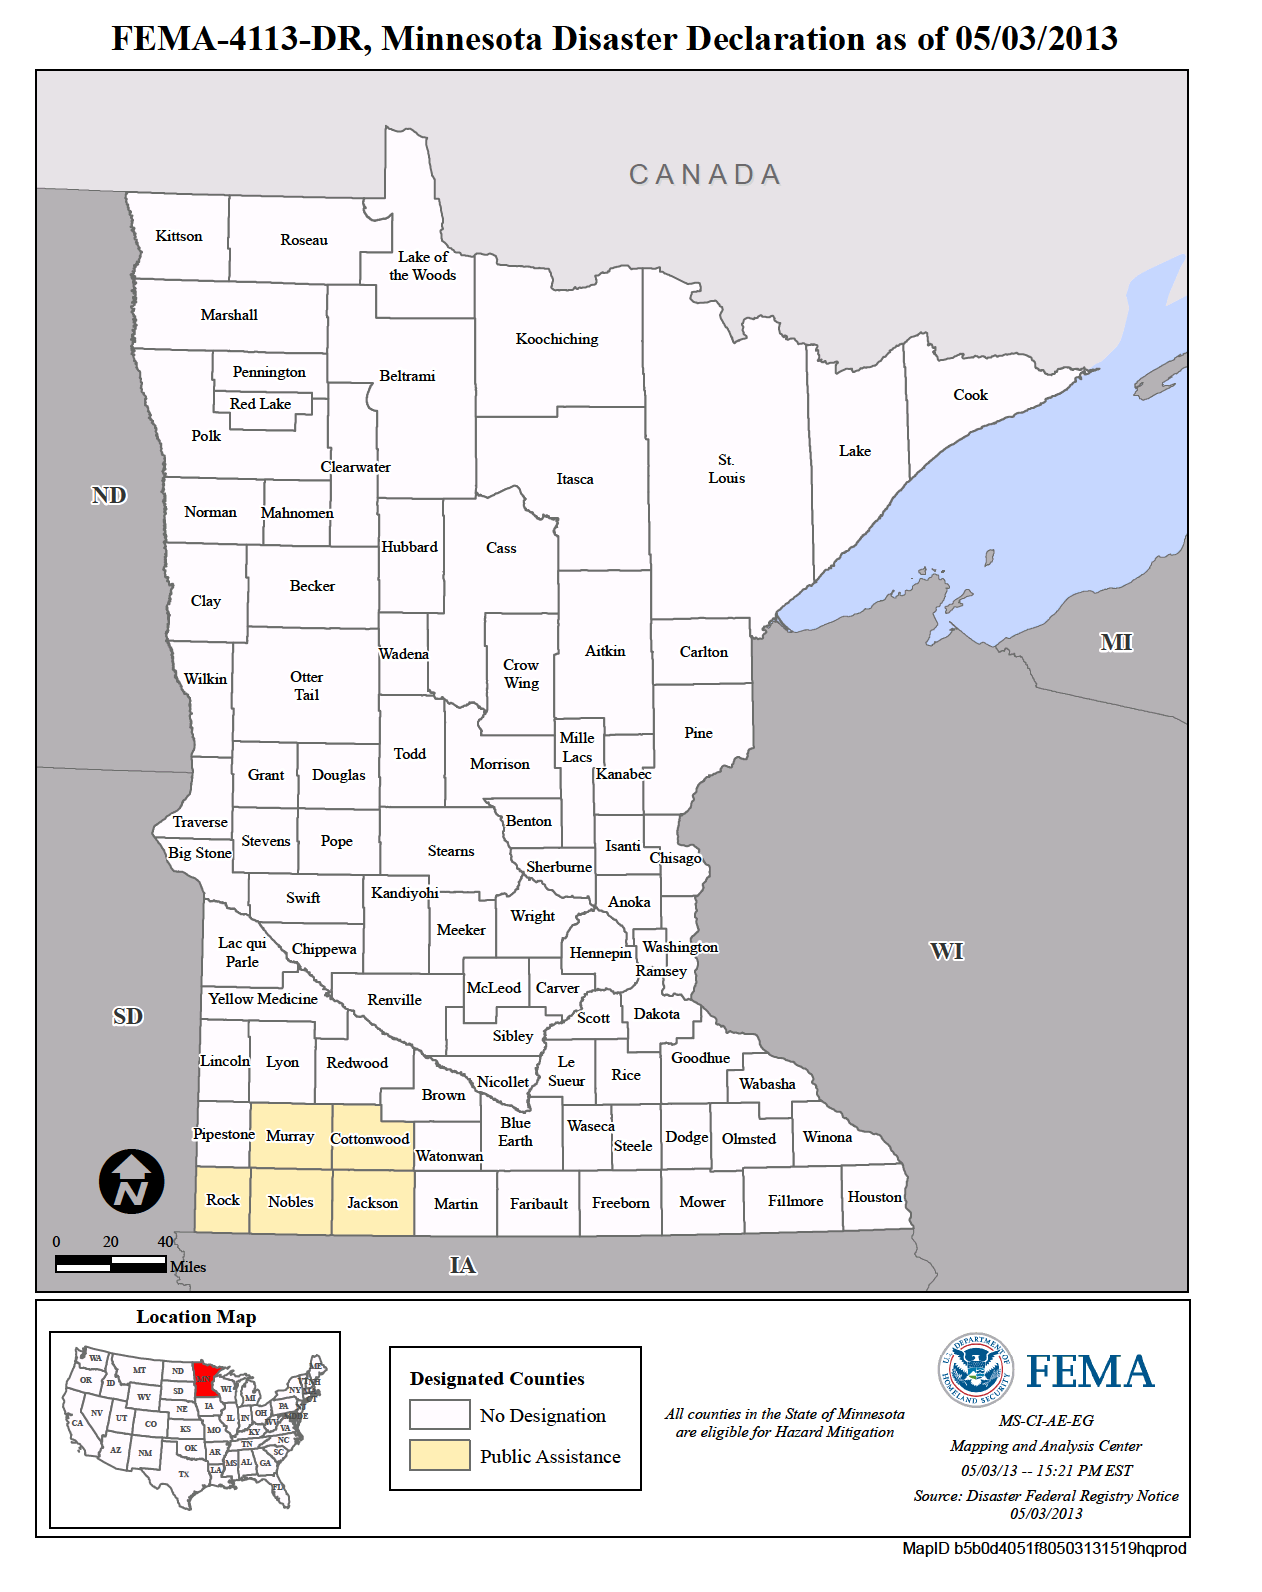 Map of Minnesota